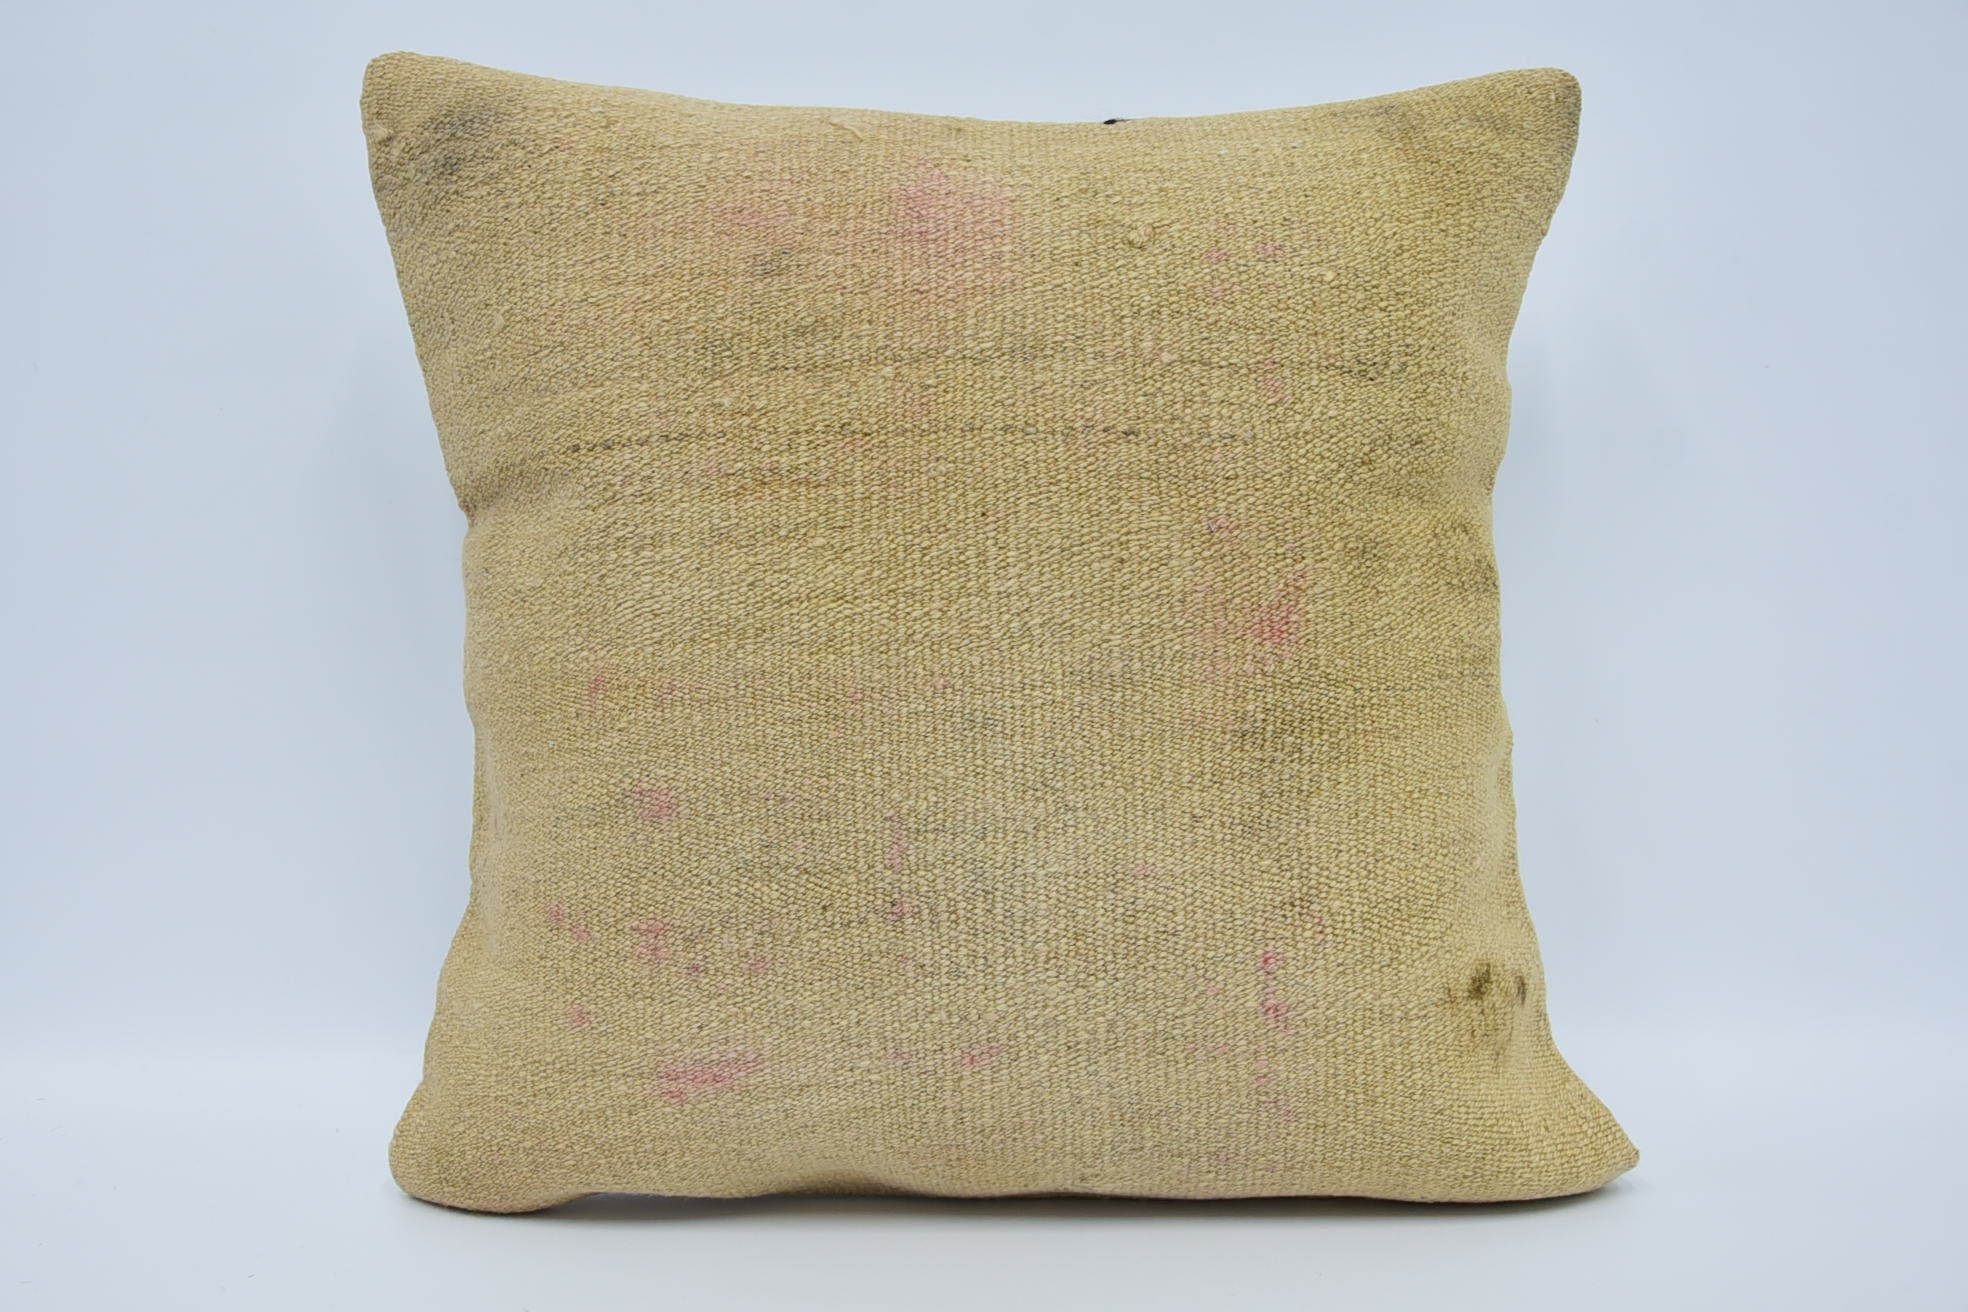 Boho Pillow Sham Cover, Couch Pillow Cover, Throw Kilim Pillow, 18"x18" Beige Pillow Case, Vintage Pillow, Crochet Pattern Pillow Sham